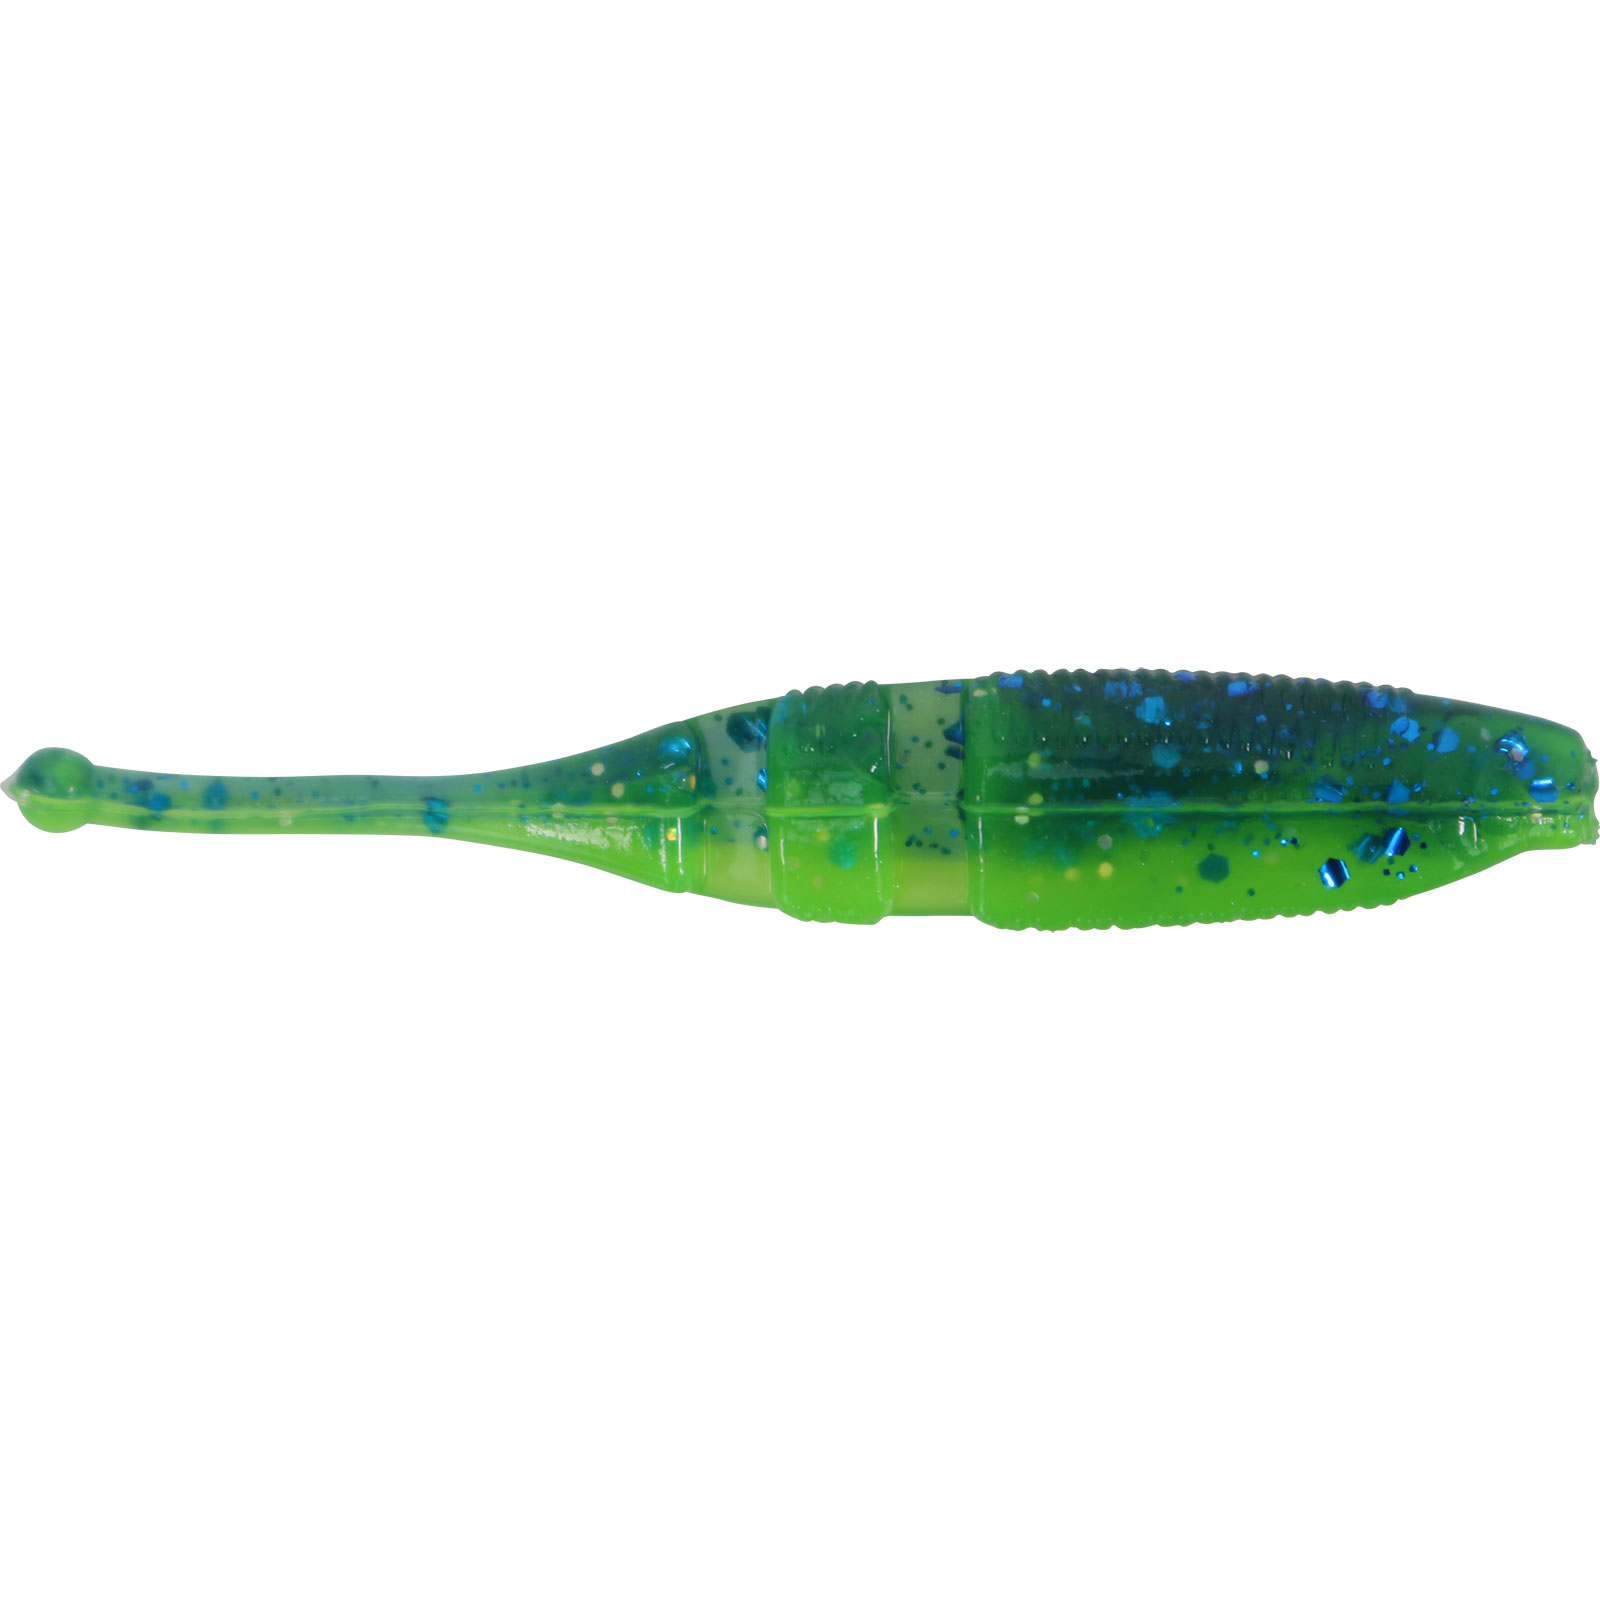 Mold Lake Fork Live Magic Shad Bait Fishing Soft Plastic Lure 63-150 mm